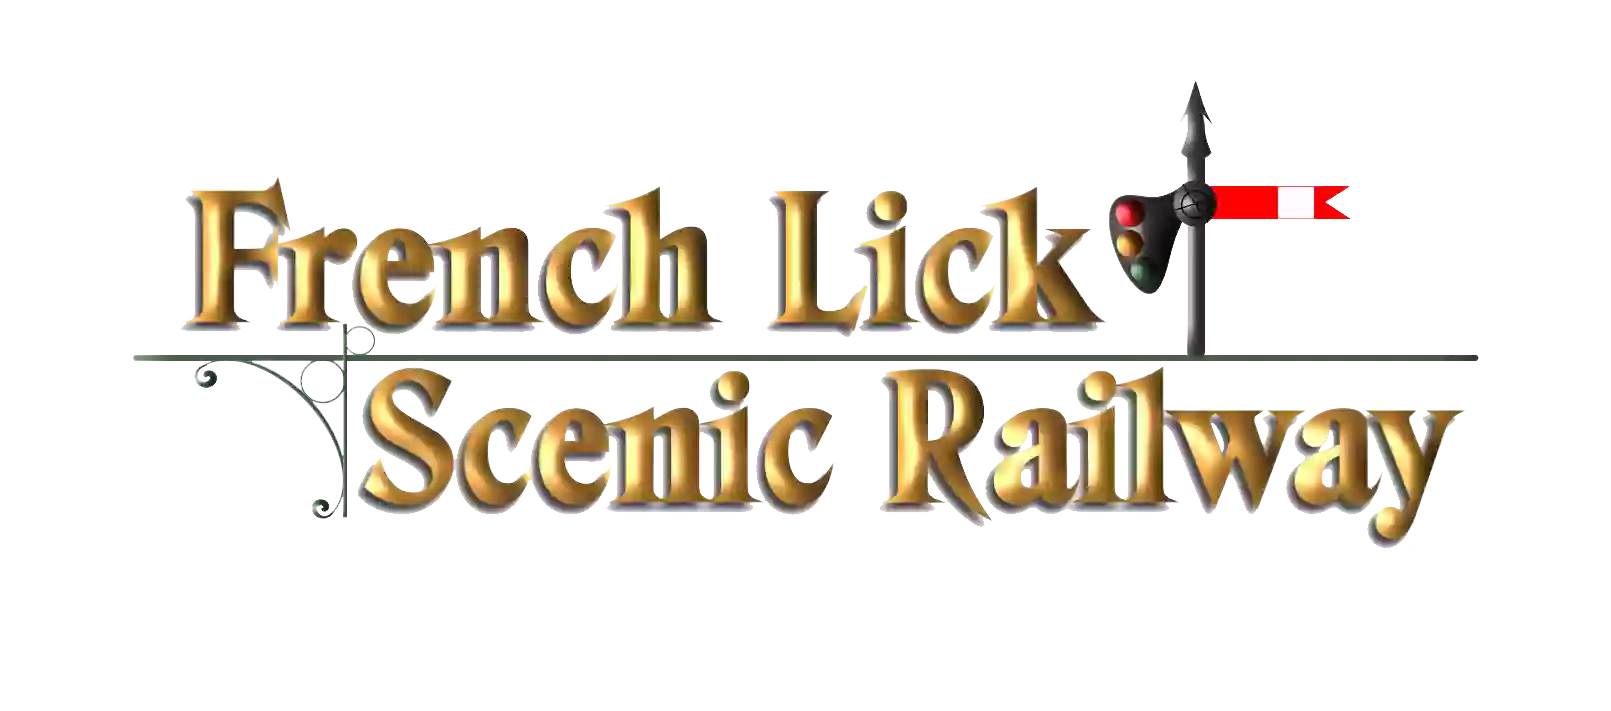 French Lick Scenic Railway